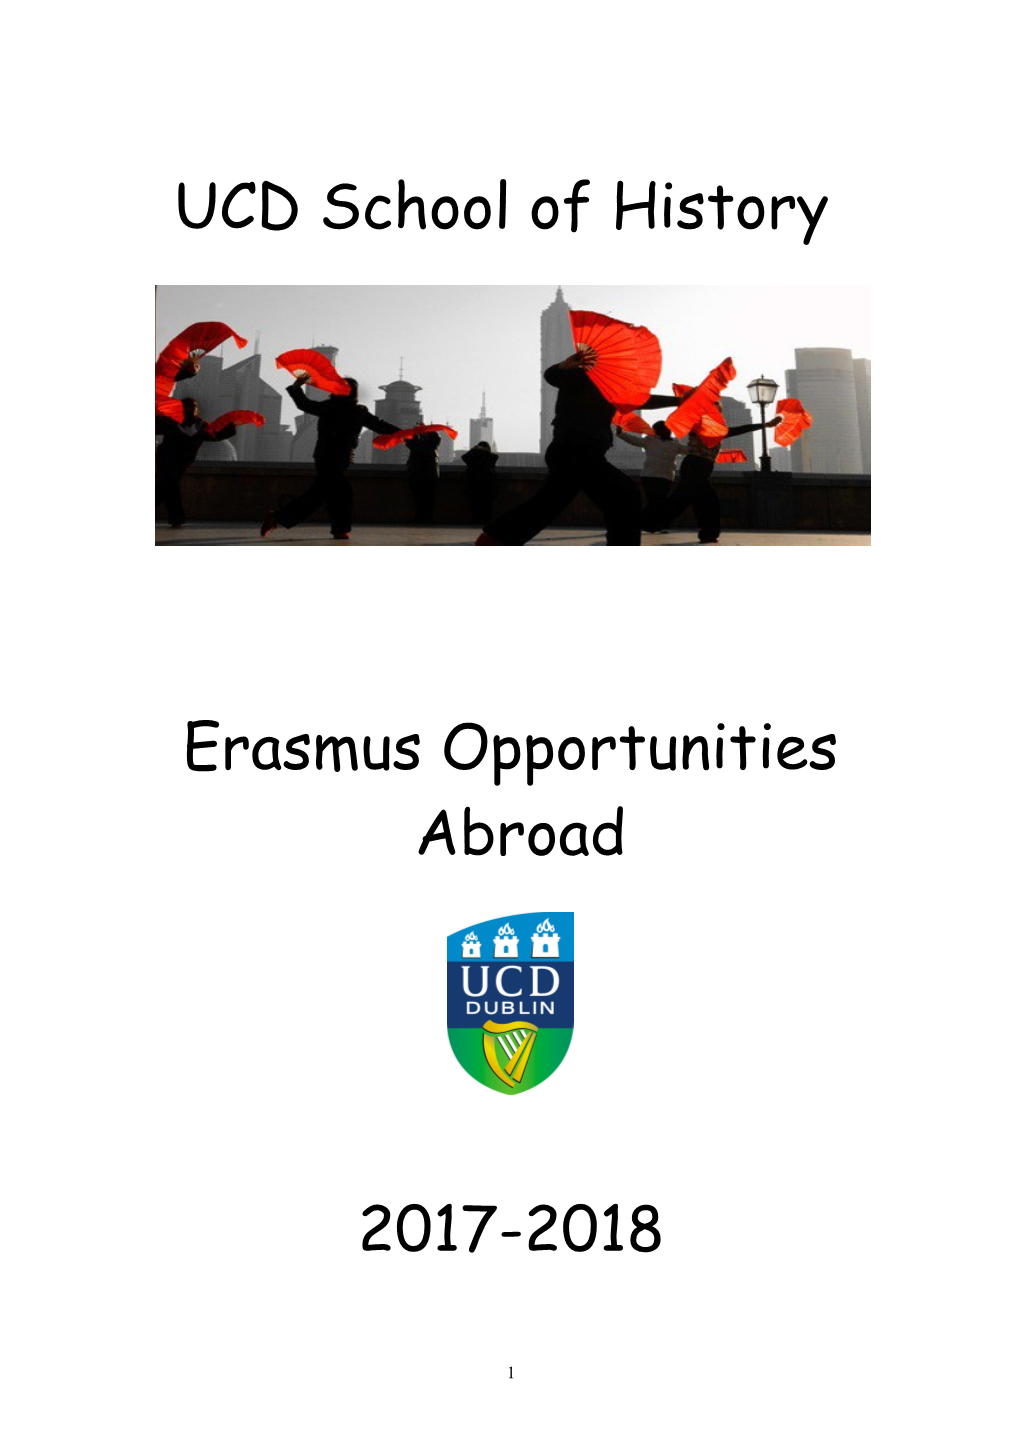 Erasmus Study Abroad